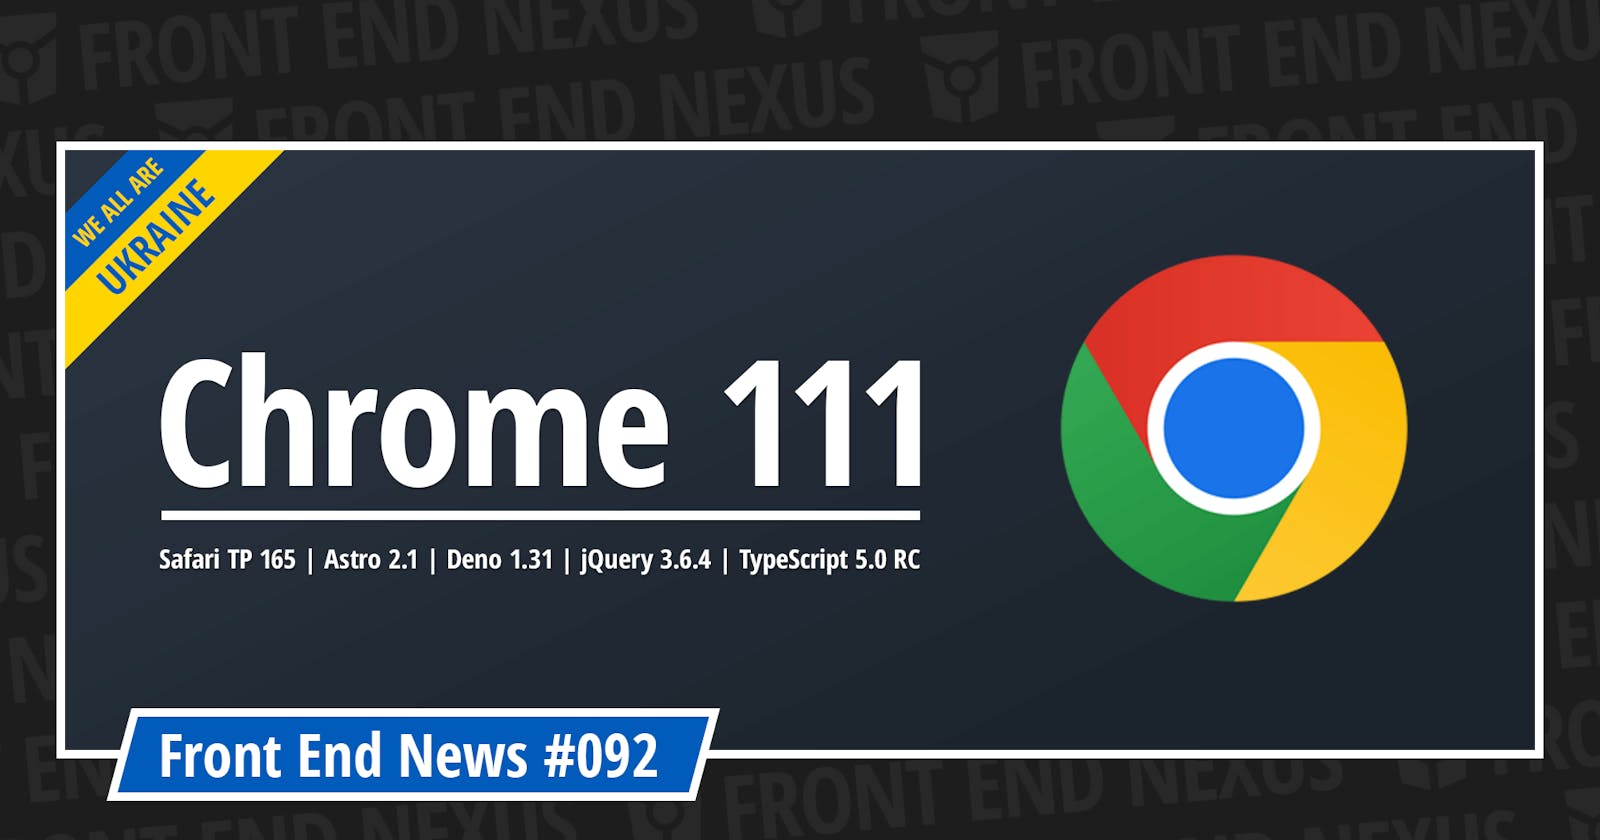 Chrome 111, Safari Technology Preview 165, Astro 2.1, Deno 1.31, jQuery 3.6.4, TypeScript 5.0 RC, and more | Front End News #092